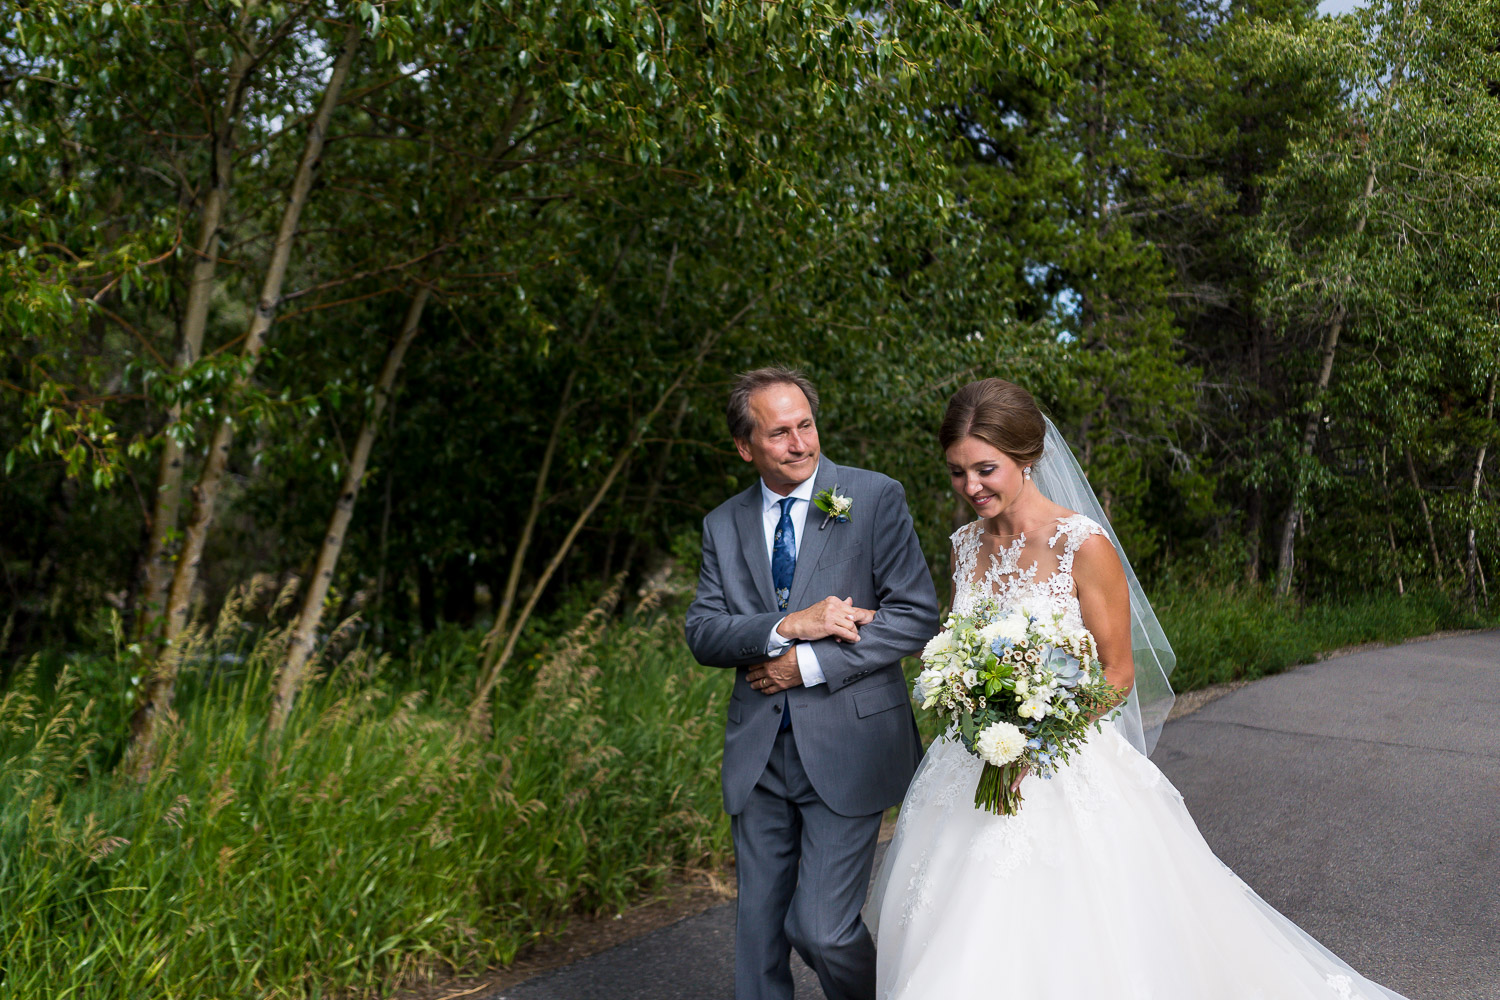 Silverthorne Pavillion Wedding Bride and groom walk